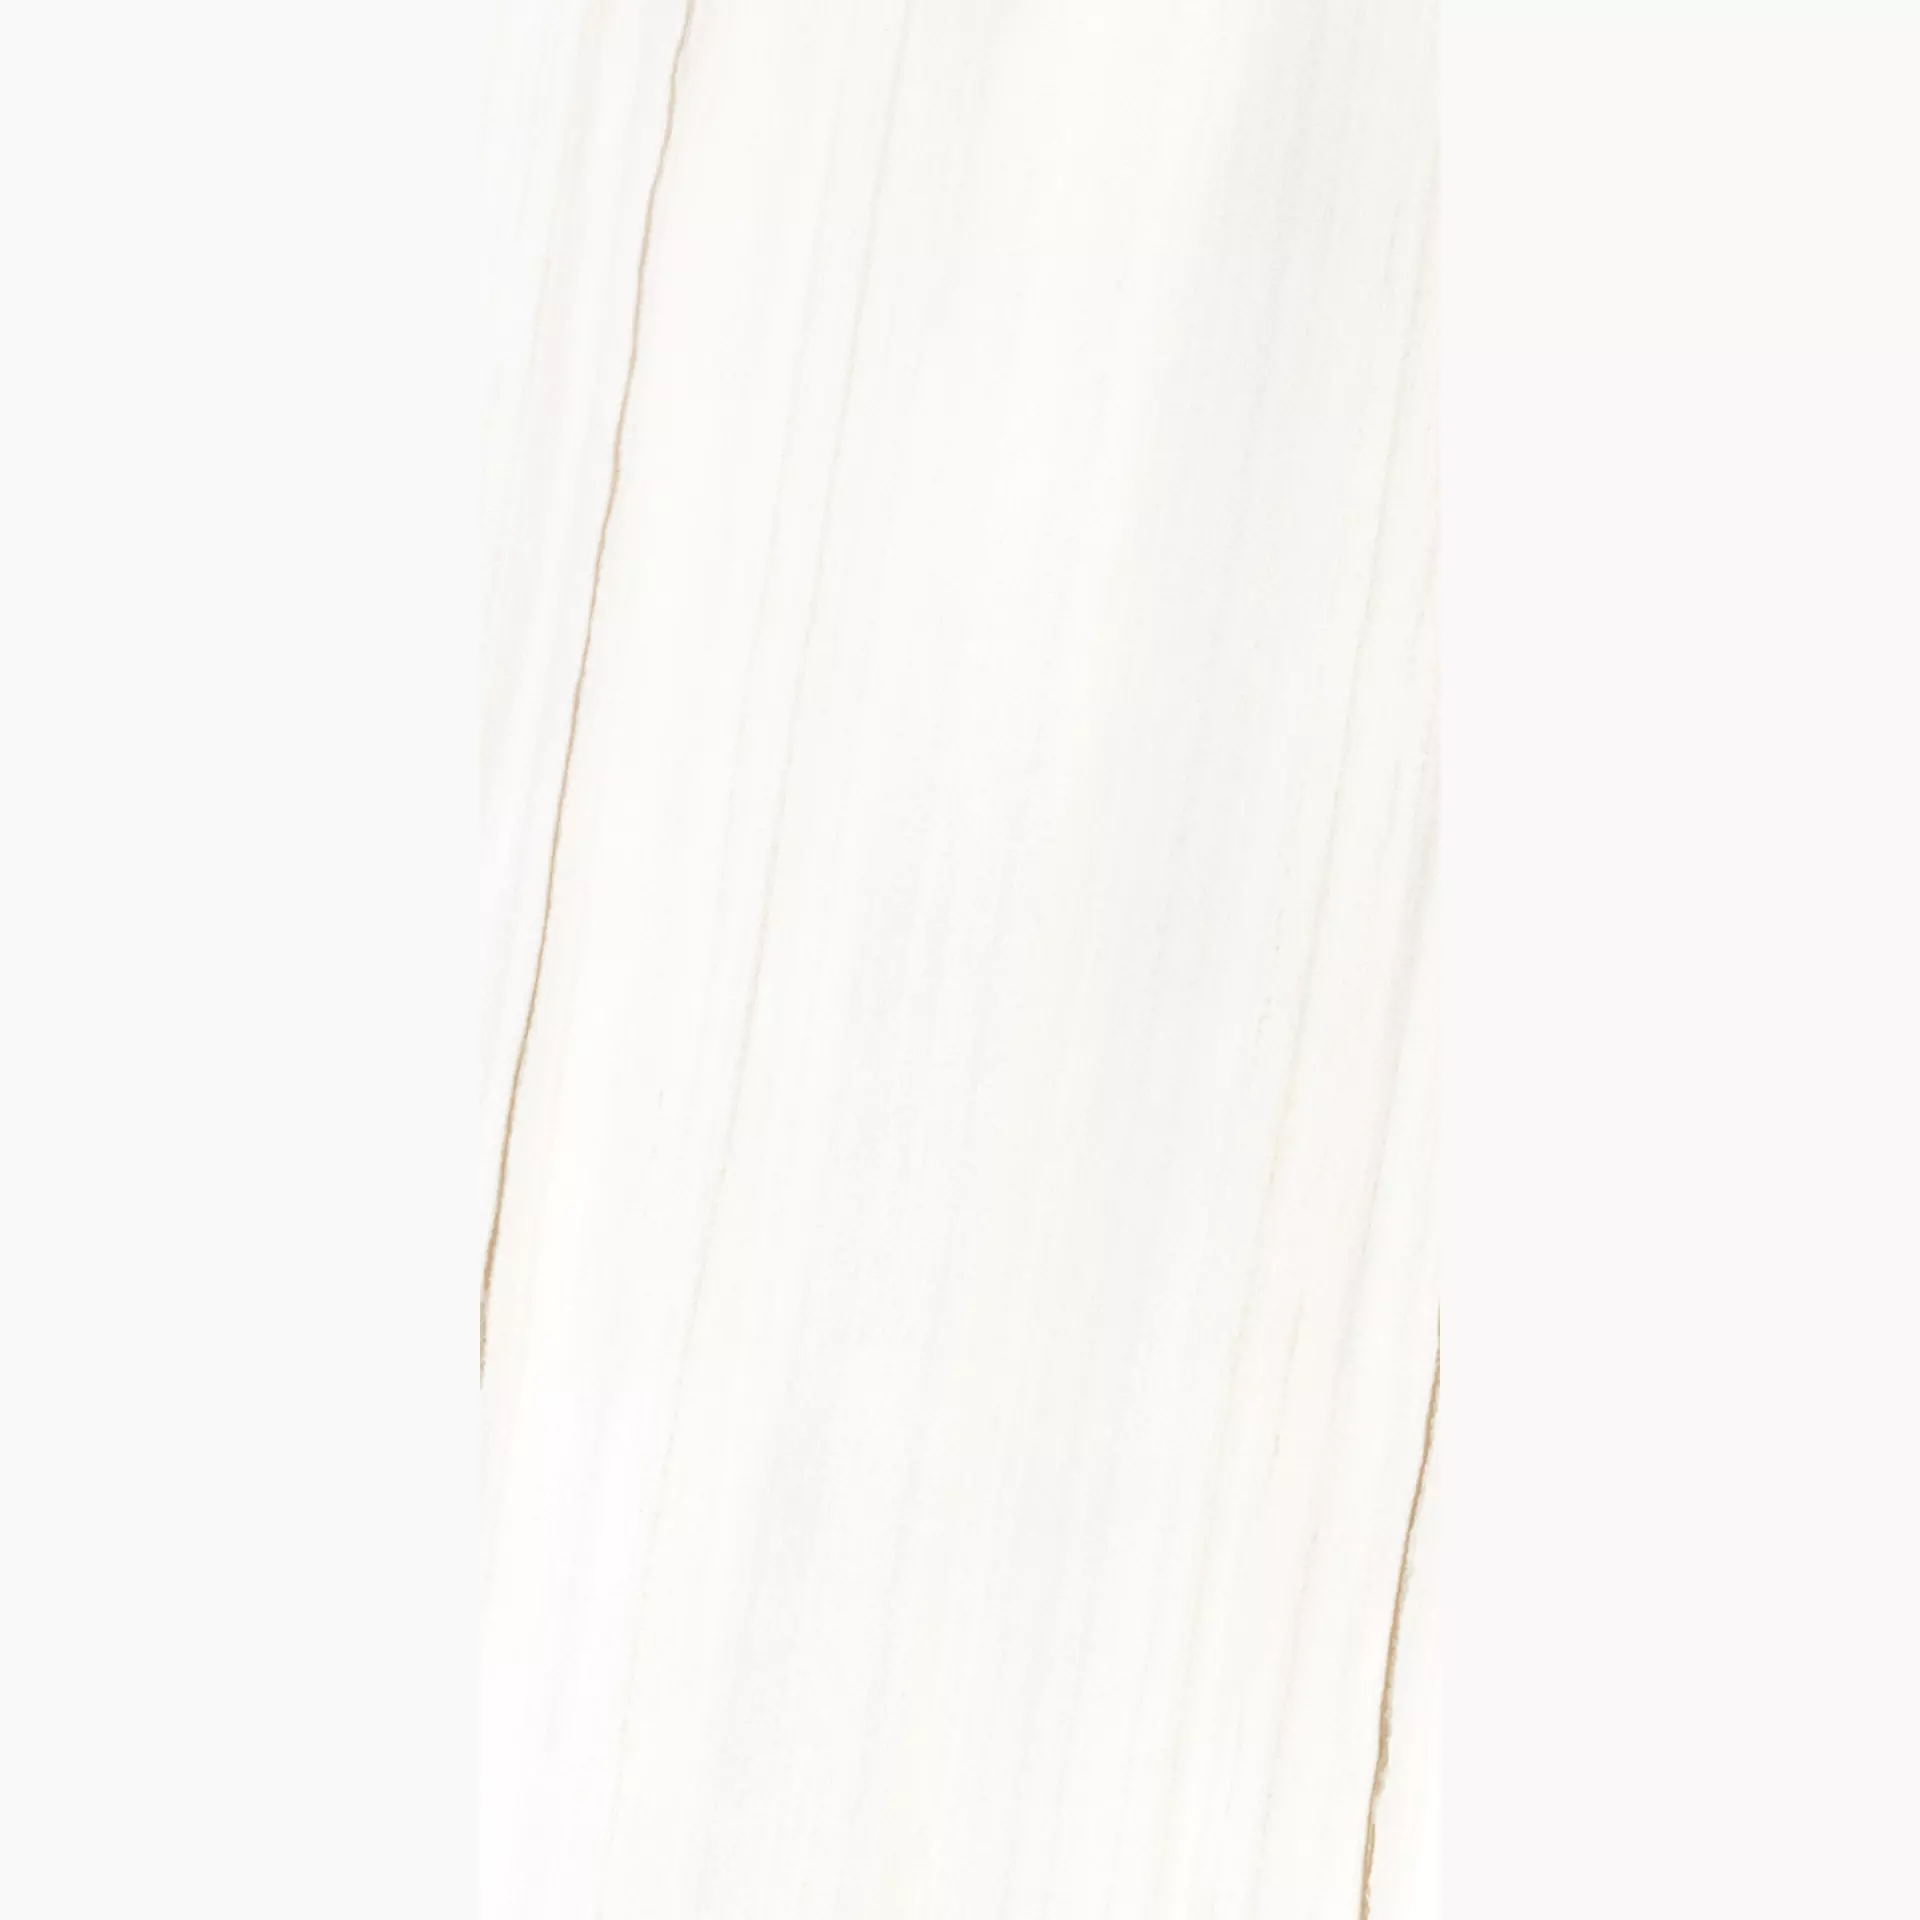 Rondine Canova Lasa White Lappato J88859 60x120cm rectified 8,5mm